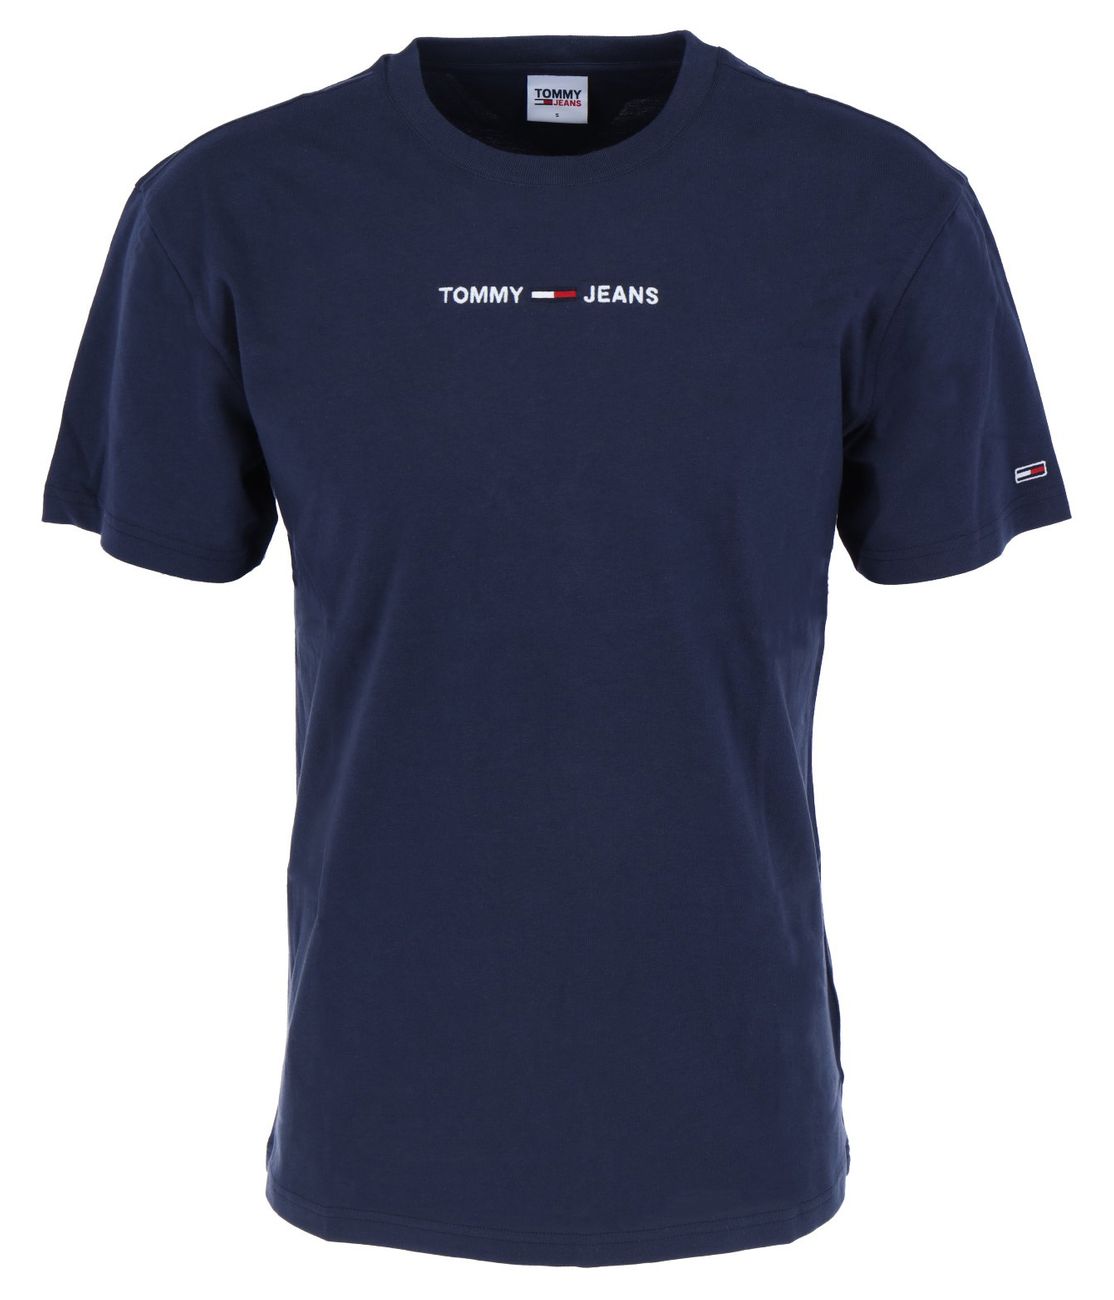 TOMMY JEANS TJM SMALL TEXT TEE Herren T-Shirt